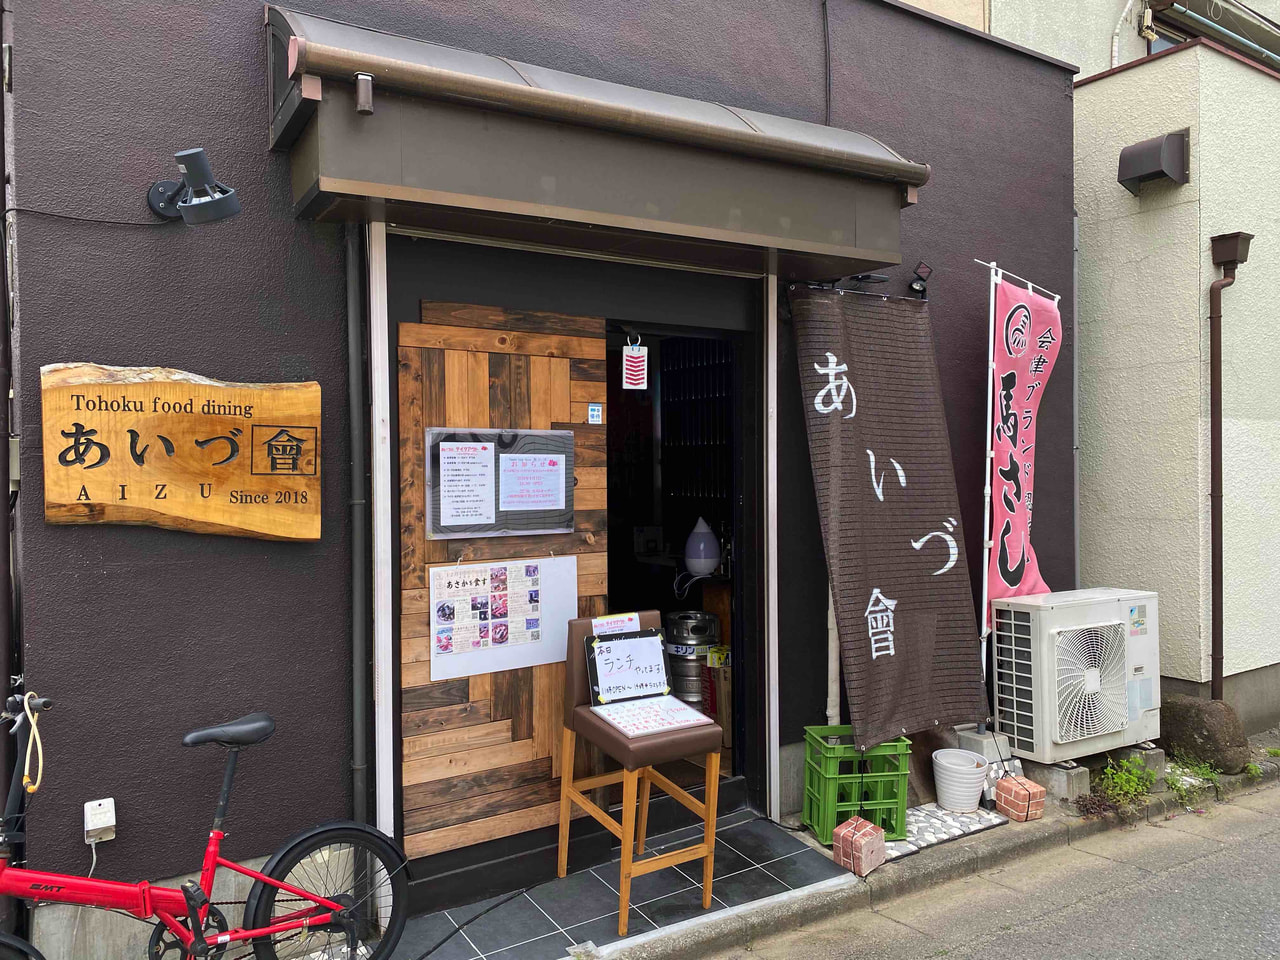 Tohoku food dining  あいづ（朝霞市）のお店の外観